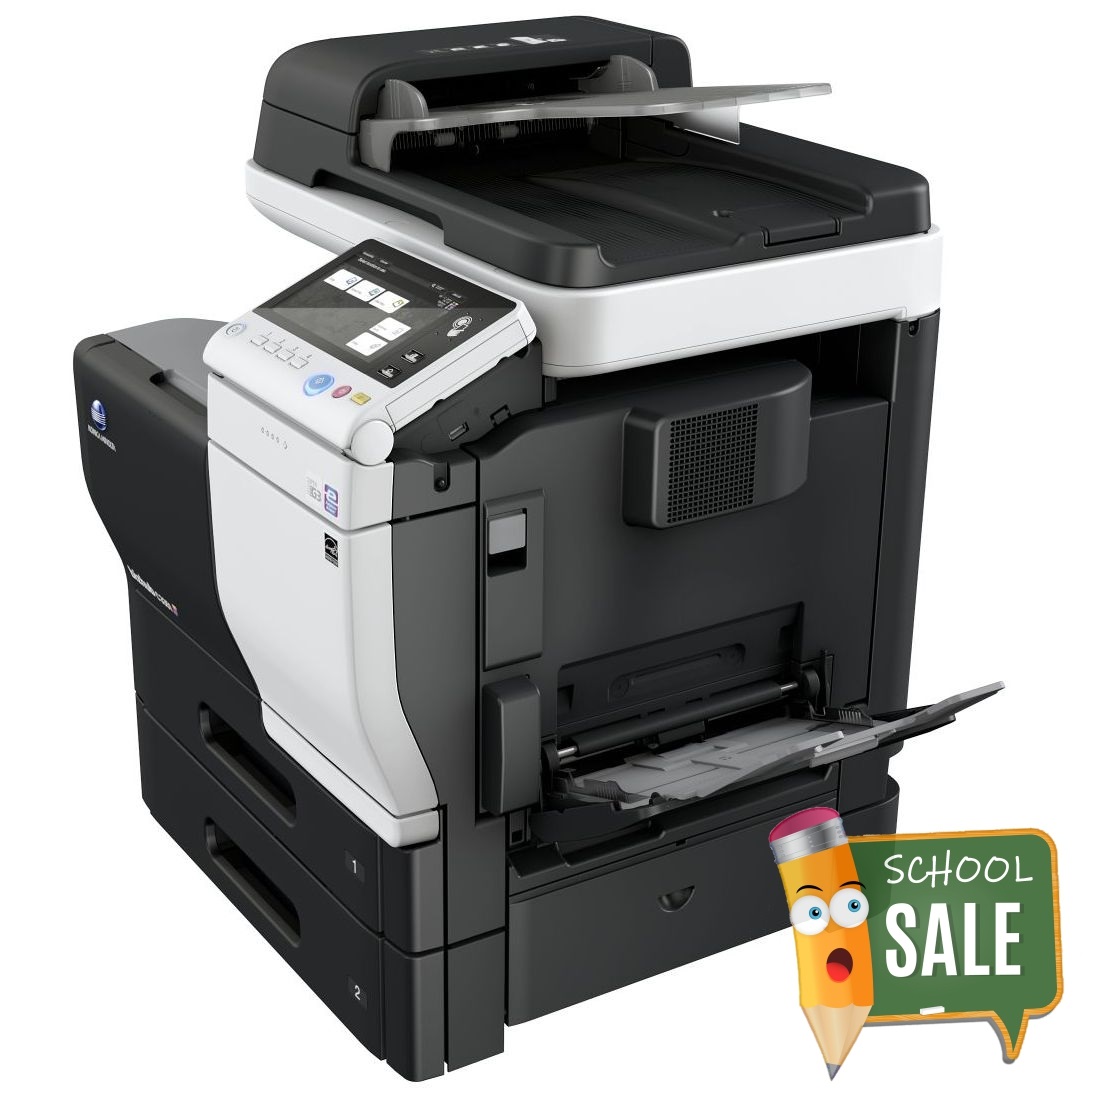 Konica Minolta Bizhub C3351 Colour Copier Printer Rental Price Offers Bypass tray